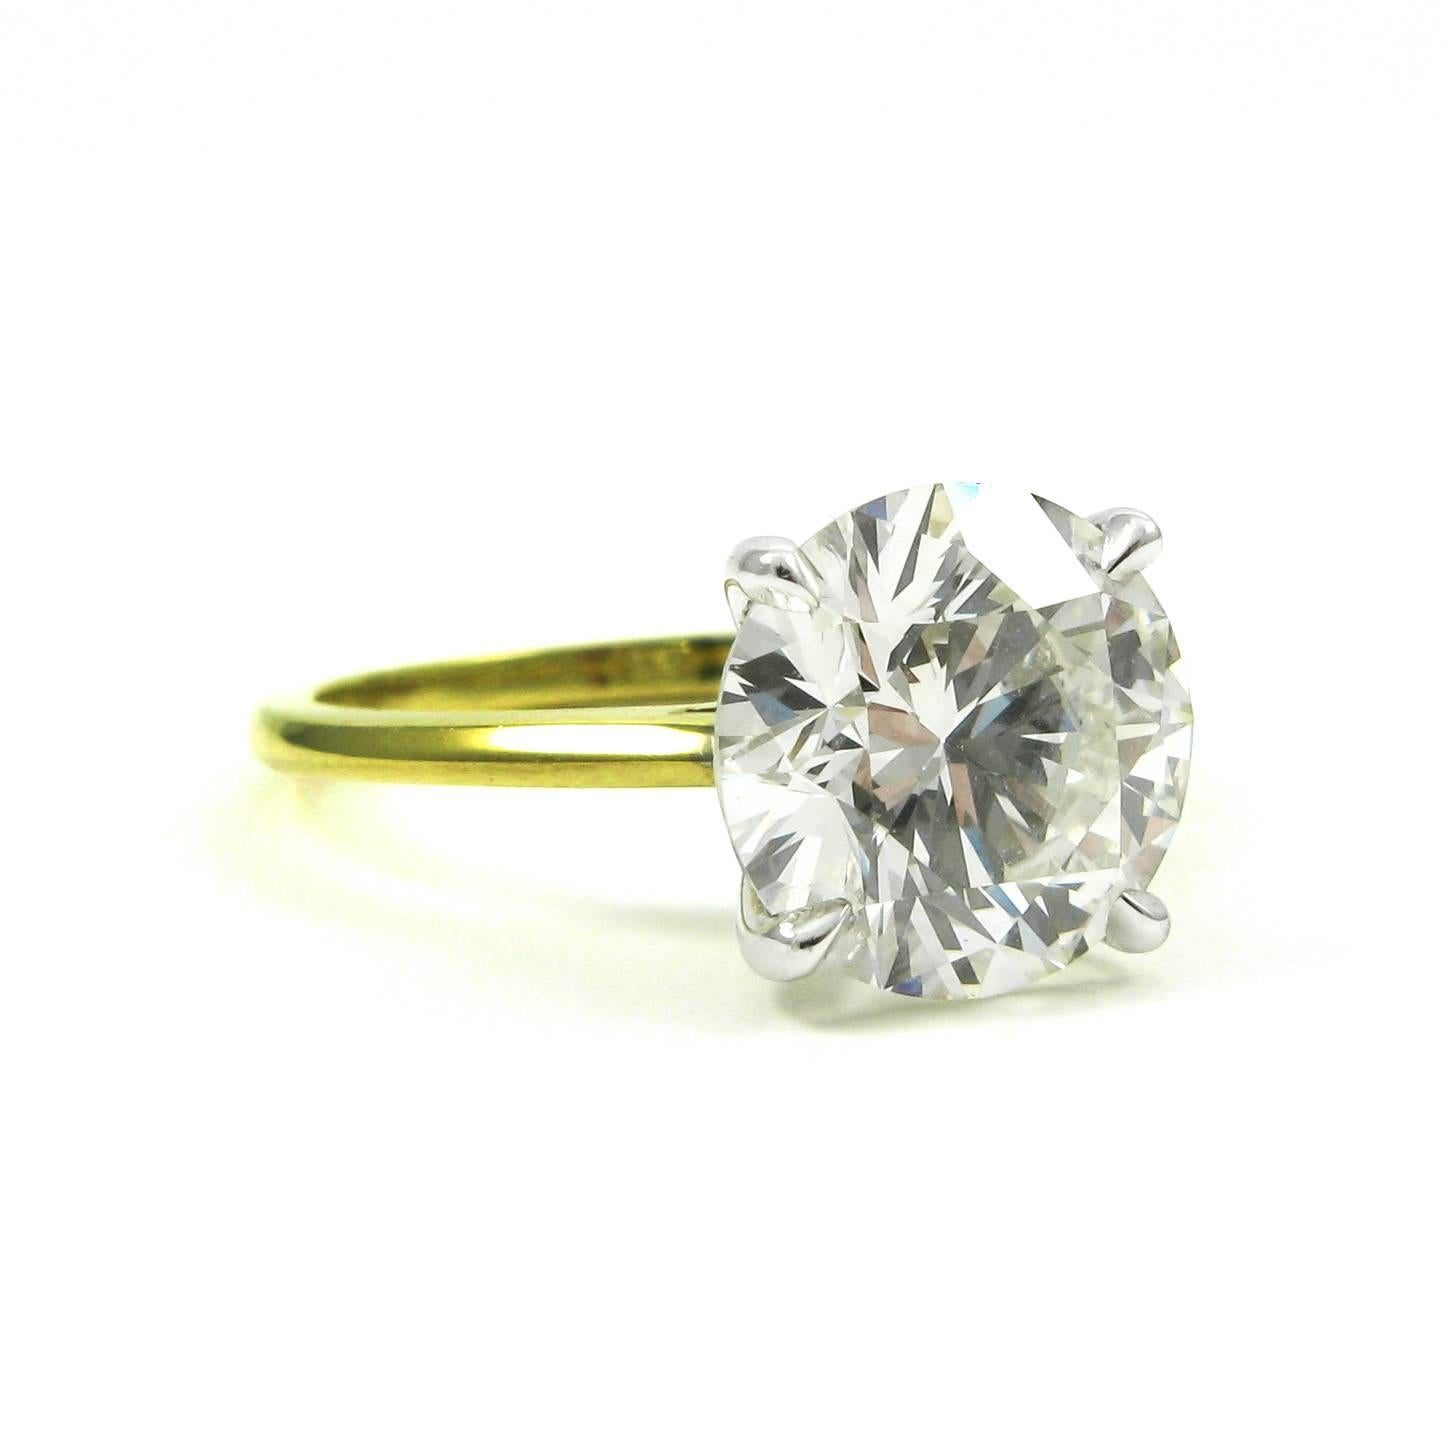 3.18 carat diamond ring